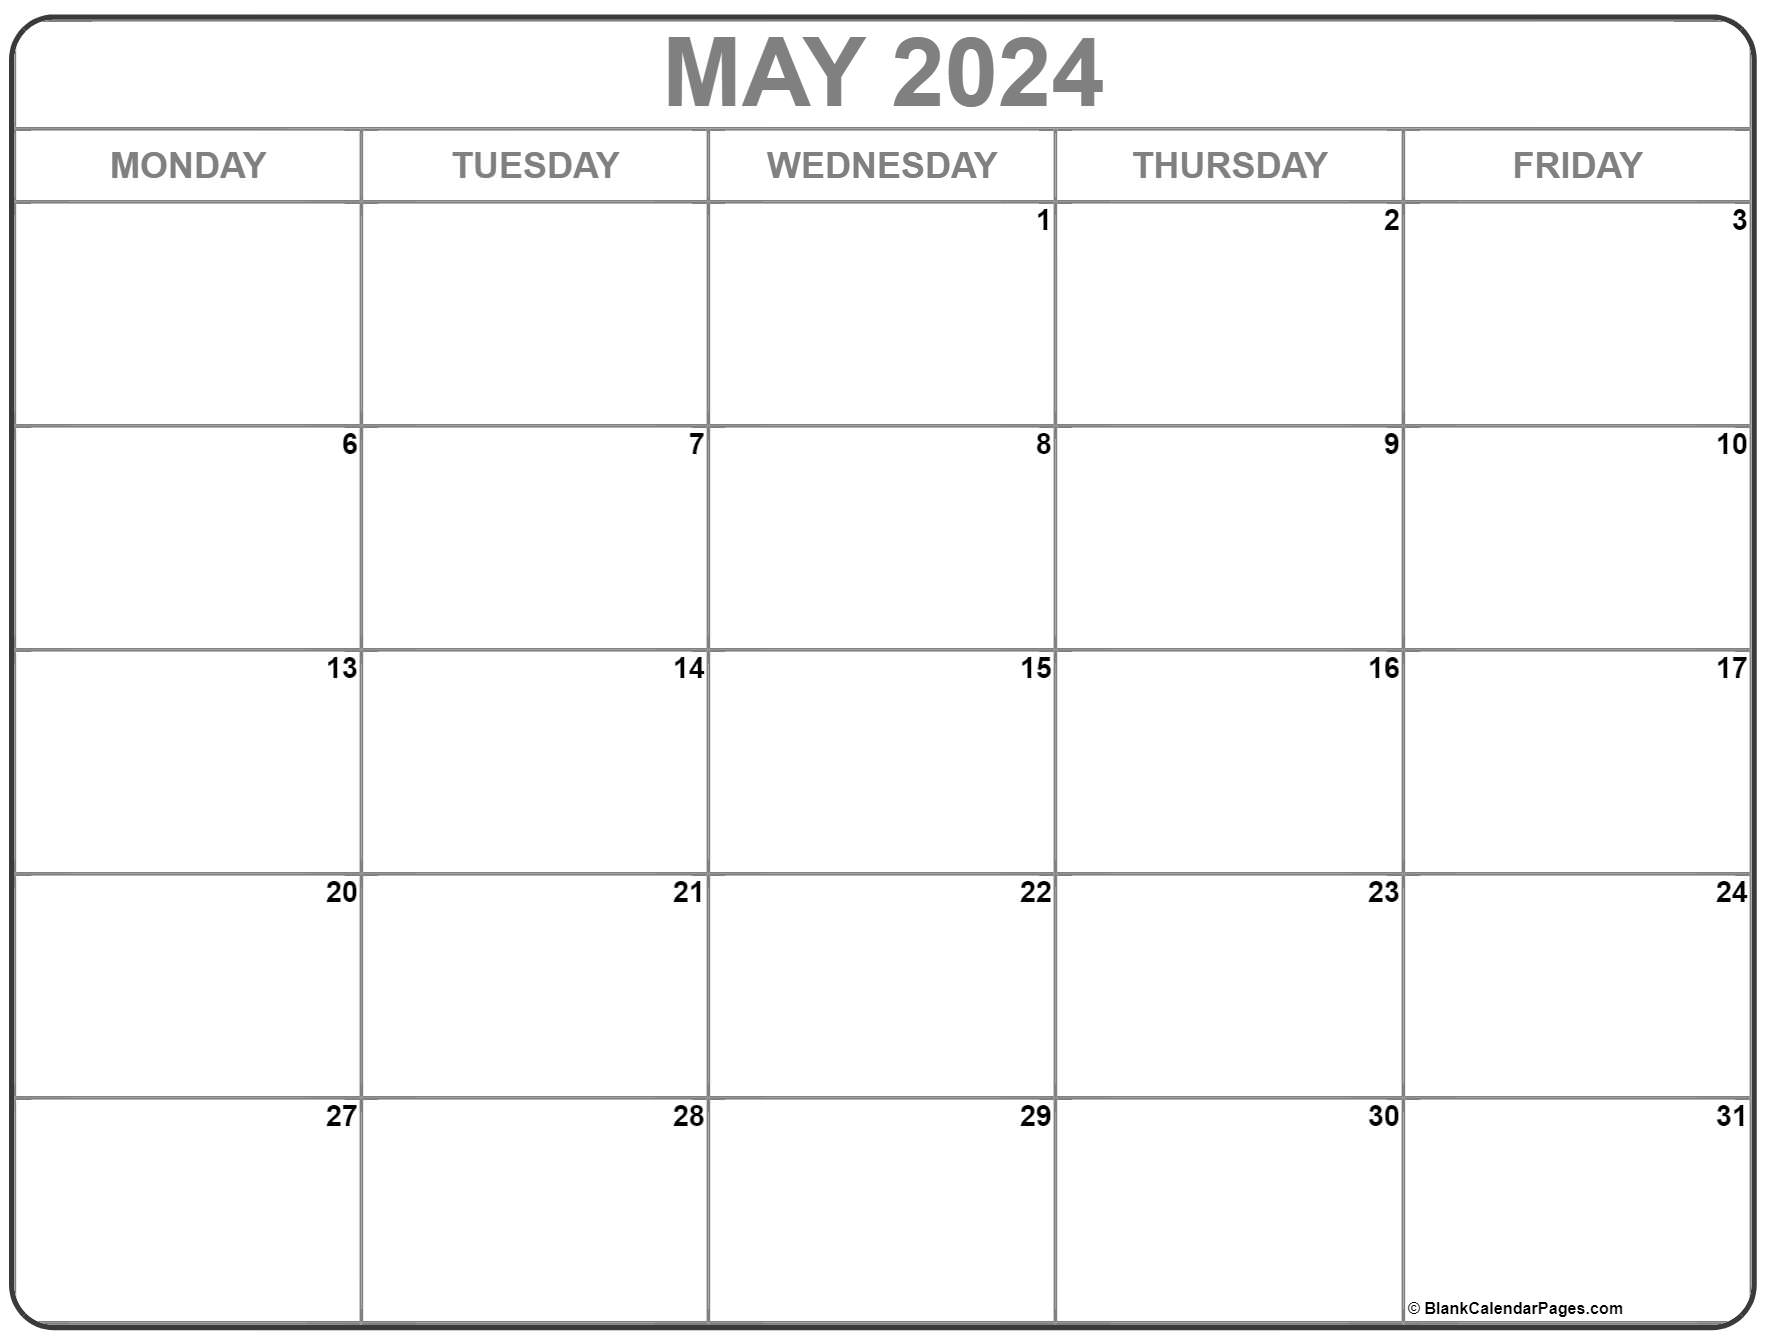 may-2024-monday-calendar-monday-to-sunday